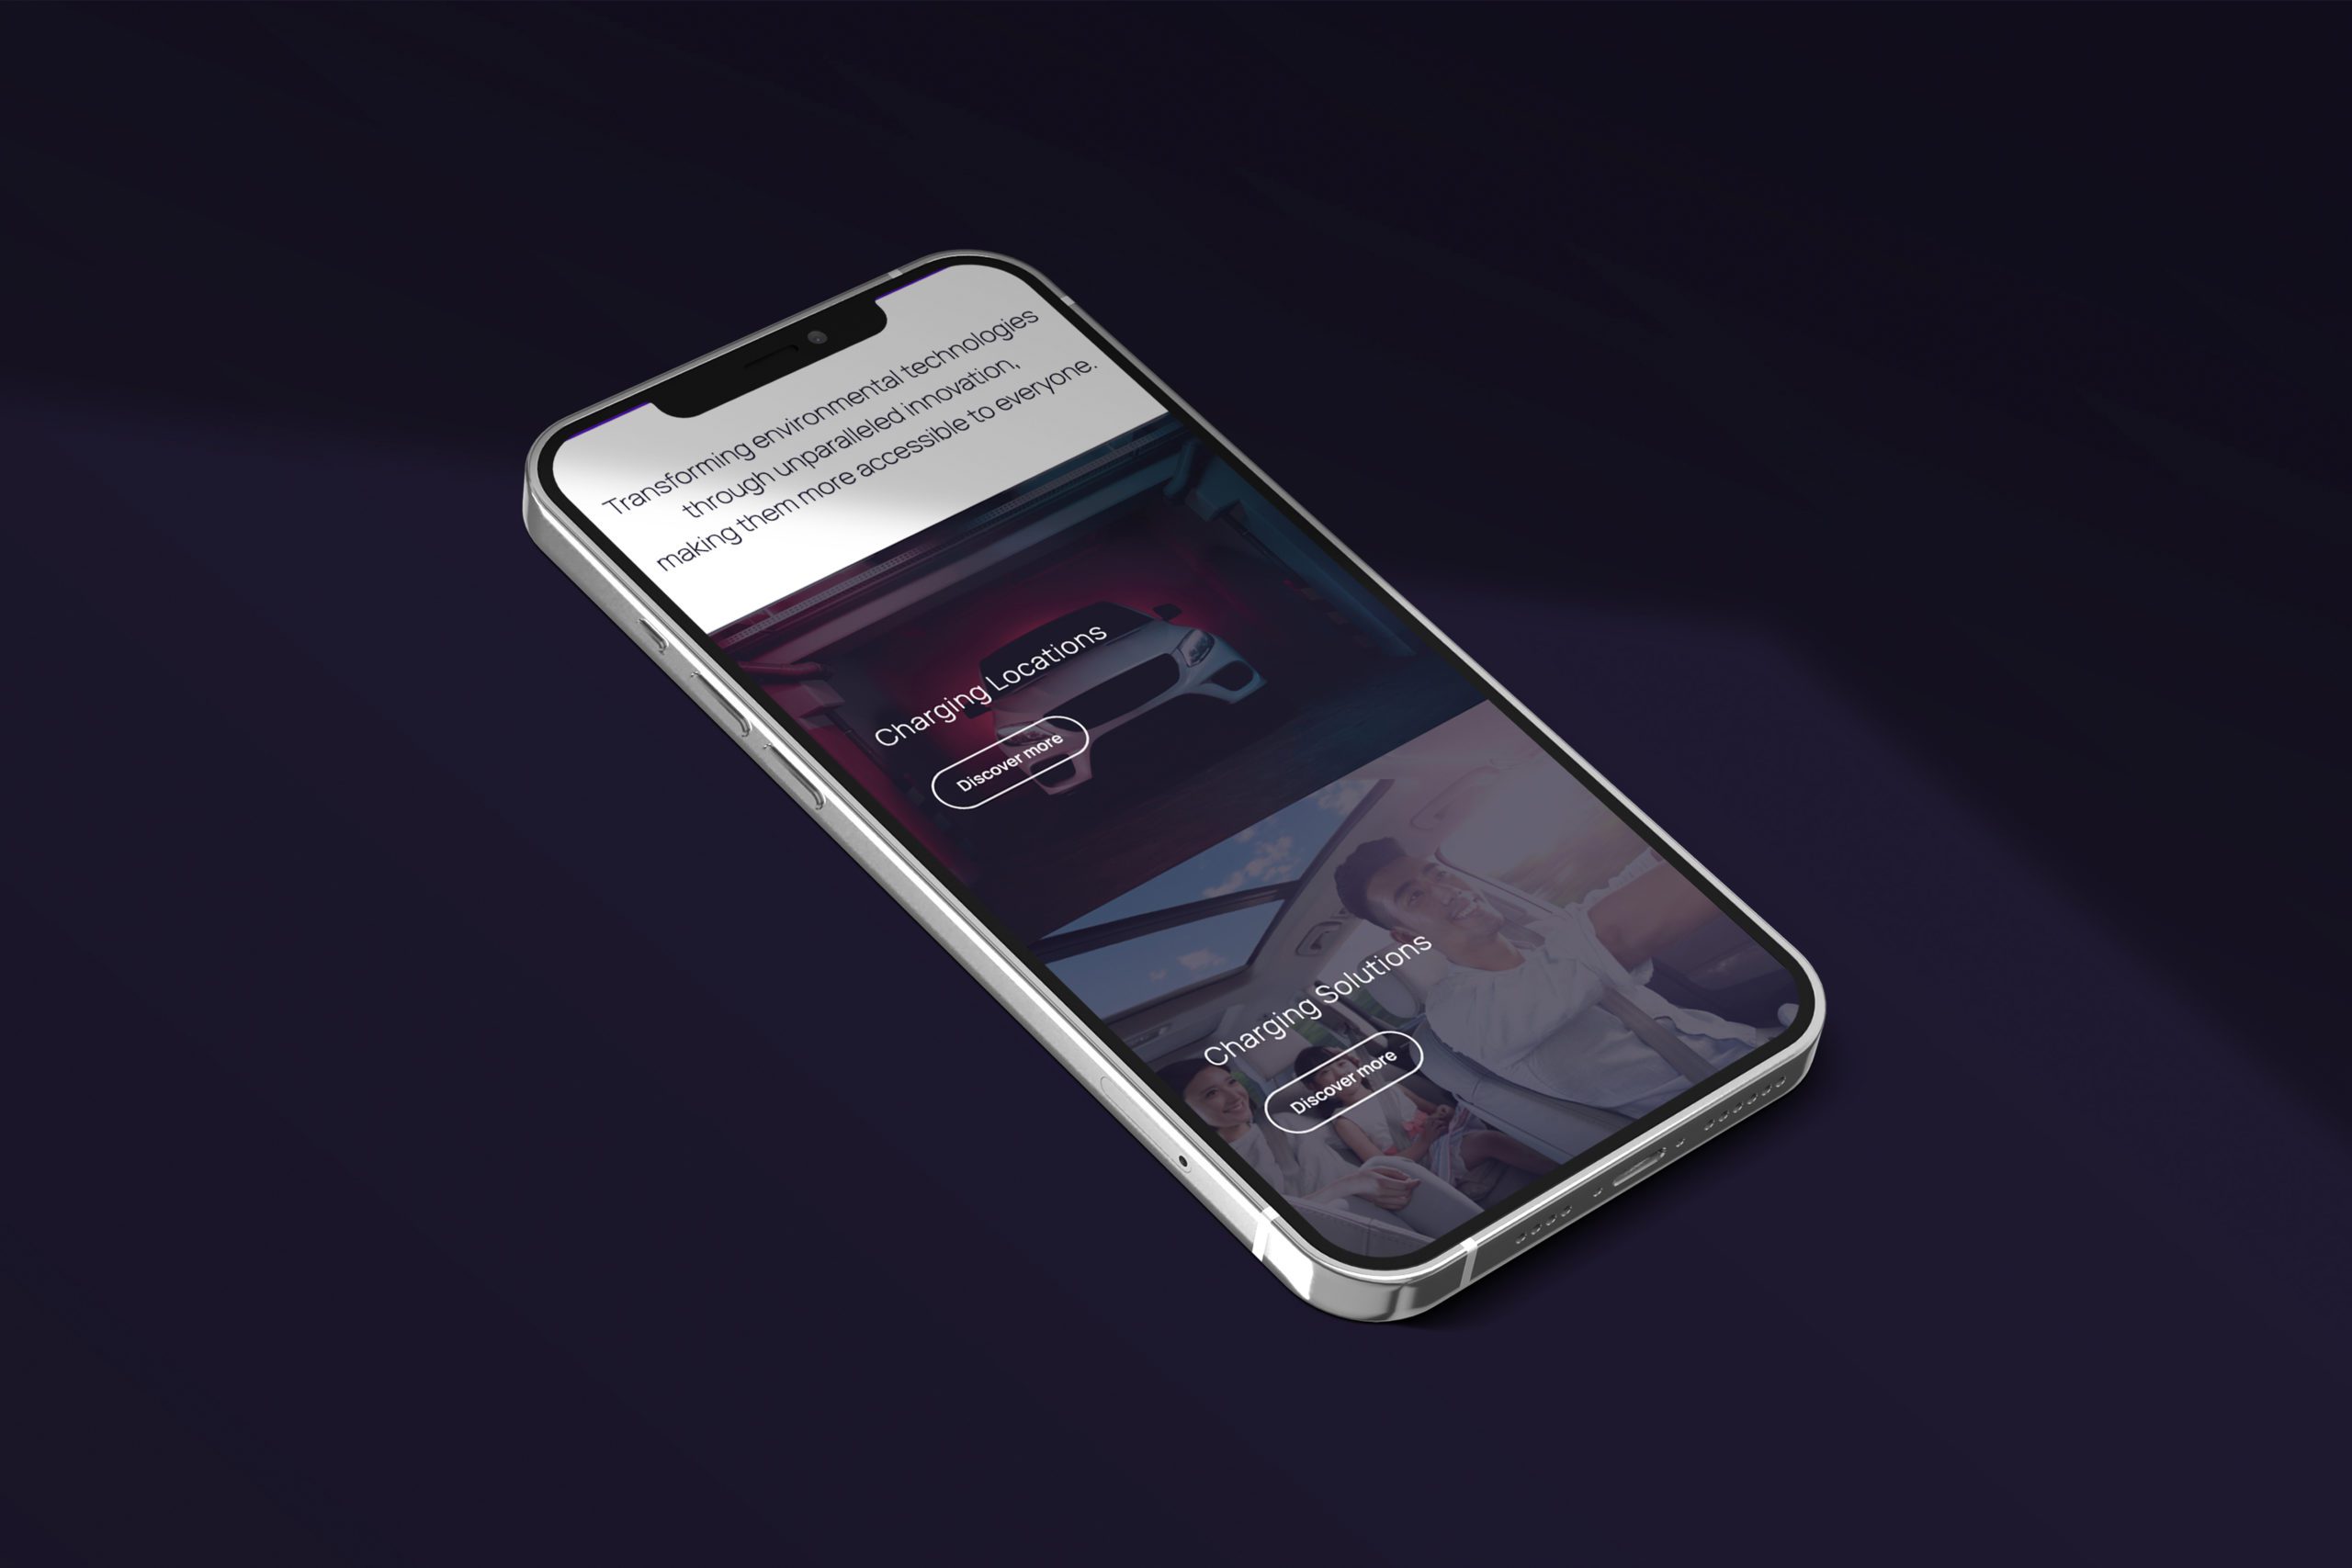 Cornerstone Technologies website on iphone screen with dark purple background